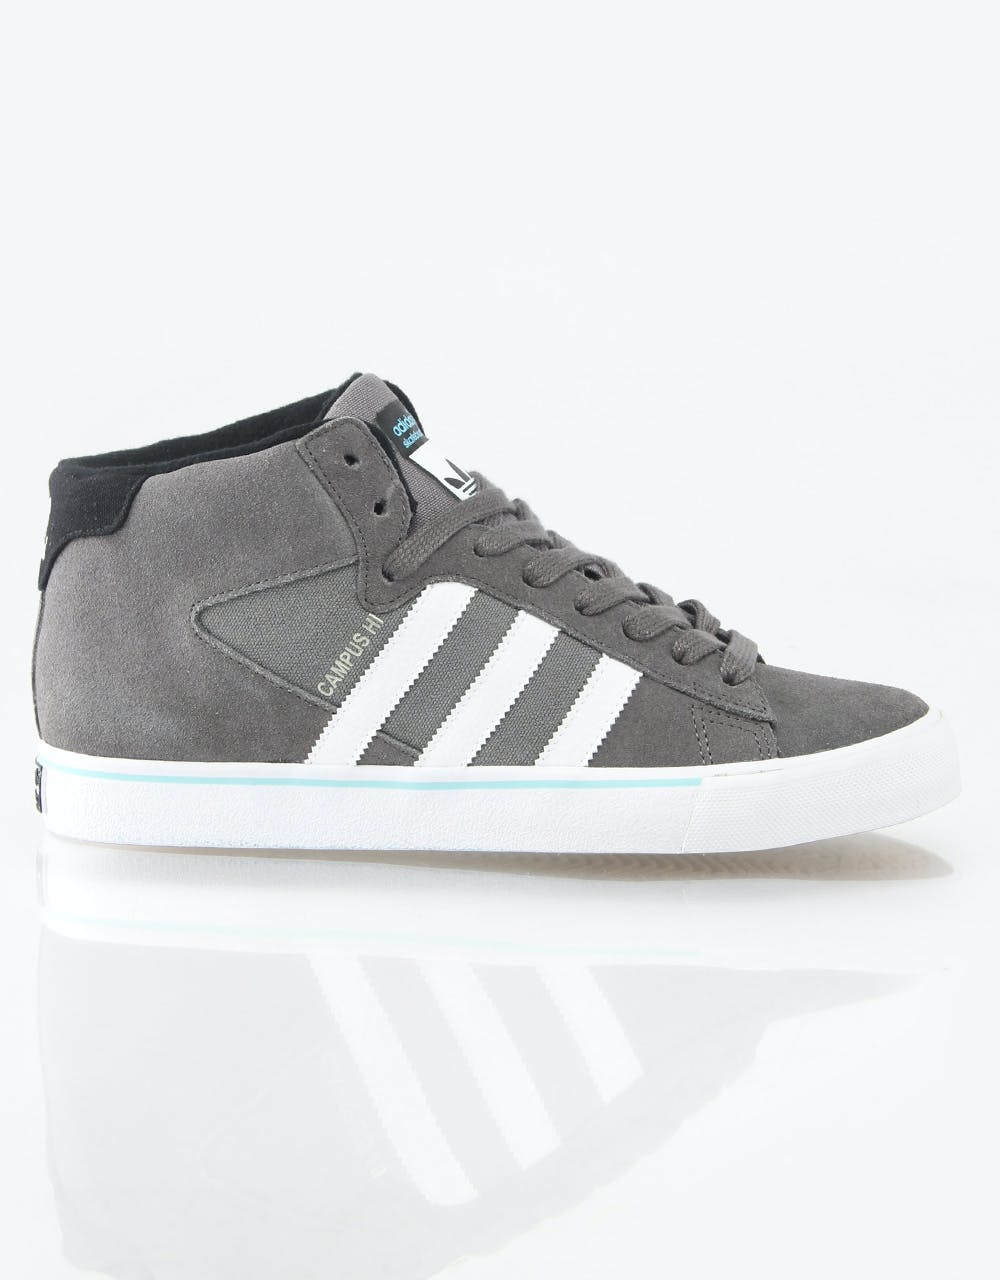 Adidas Campus Vulc Mid Skate Shoes - Cinder/White/Black